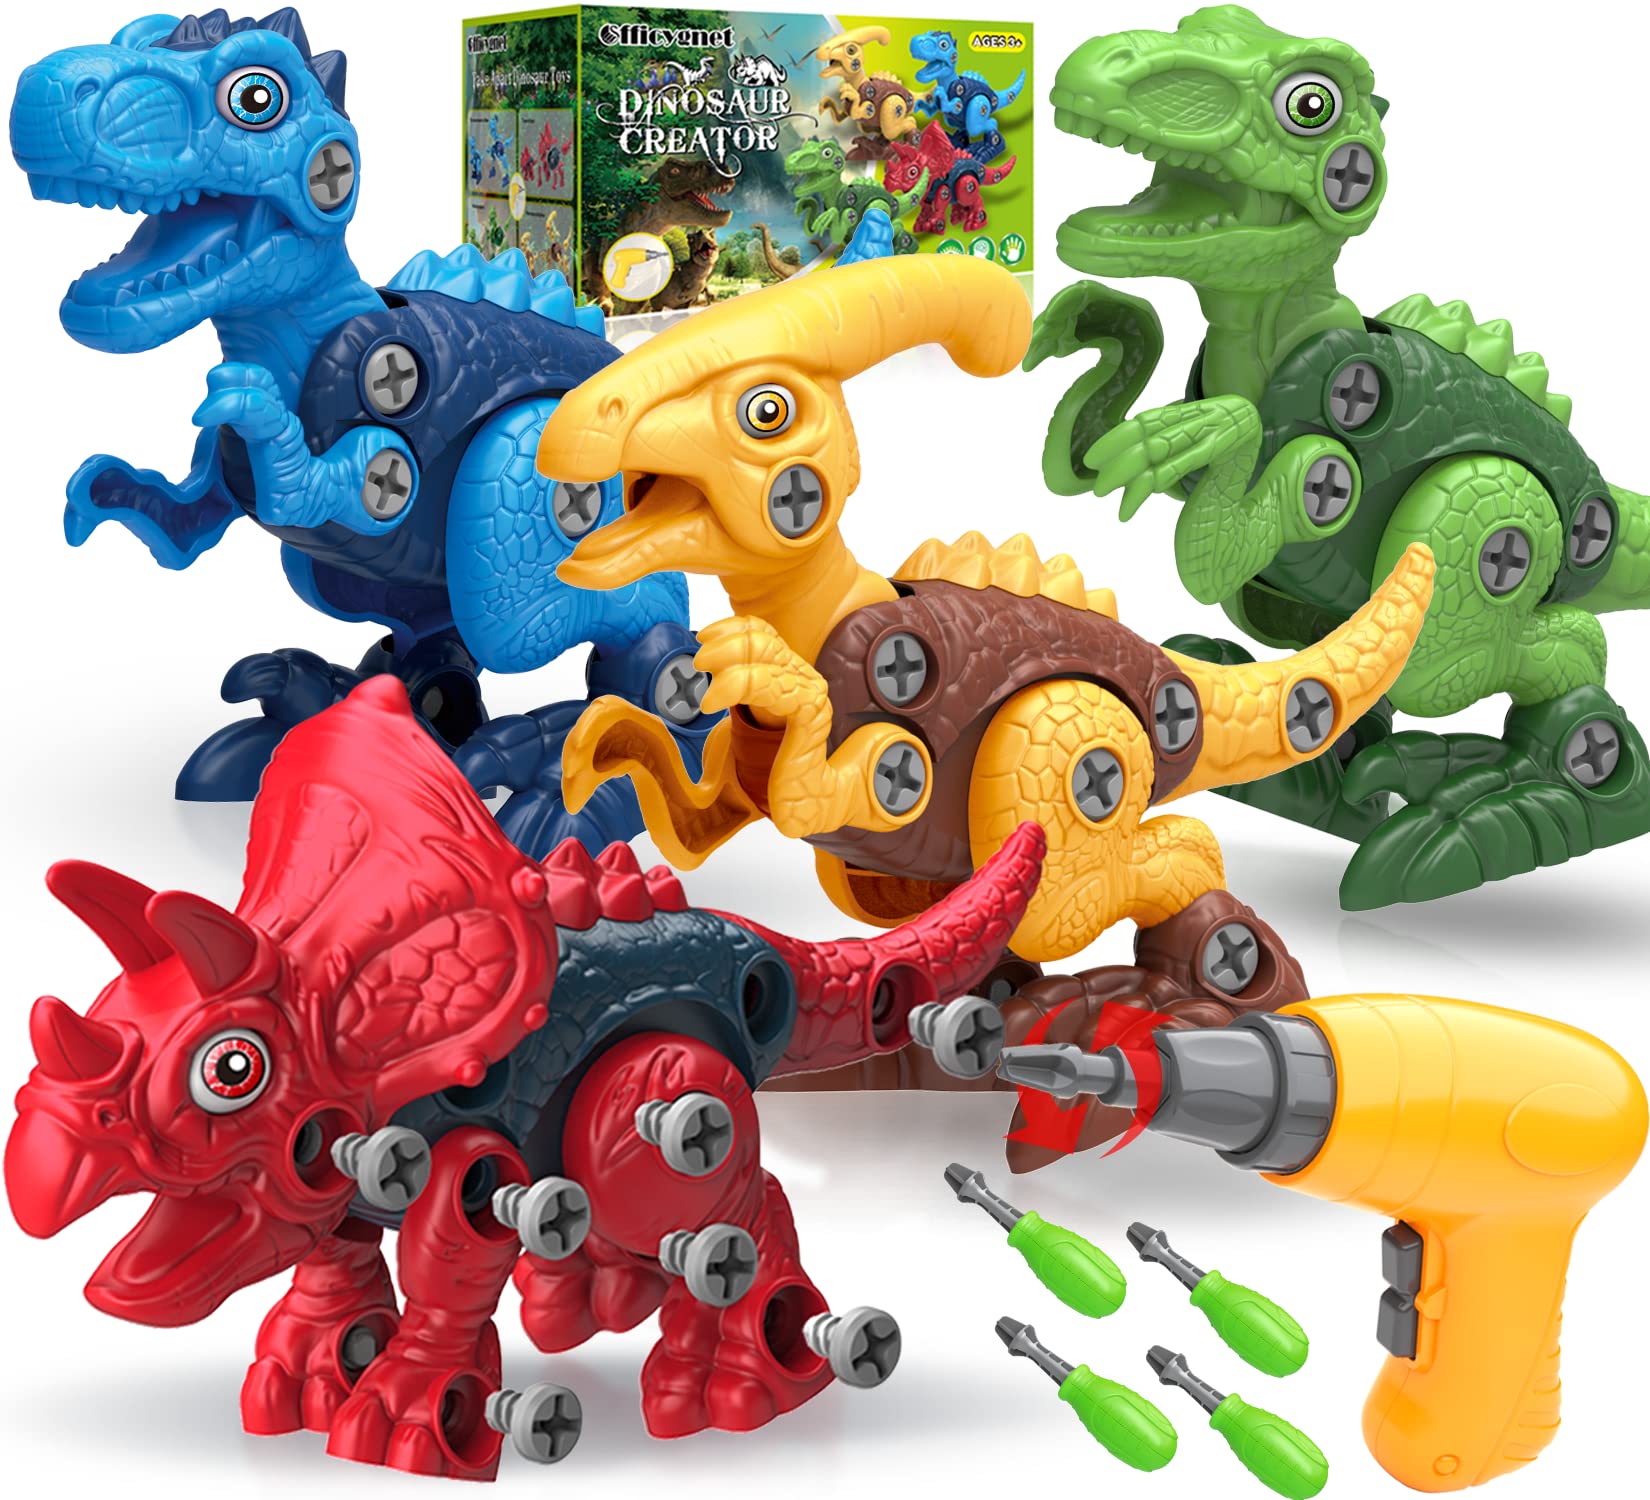 Officygnet Take Apart Dinosaur Toys